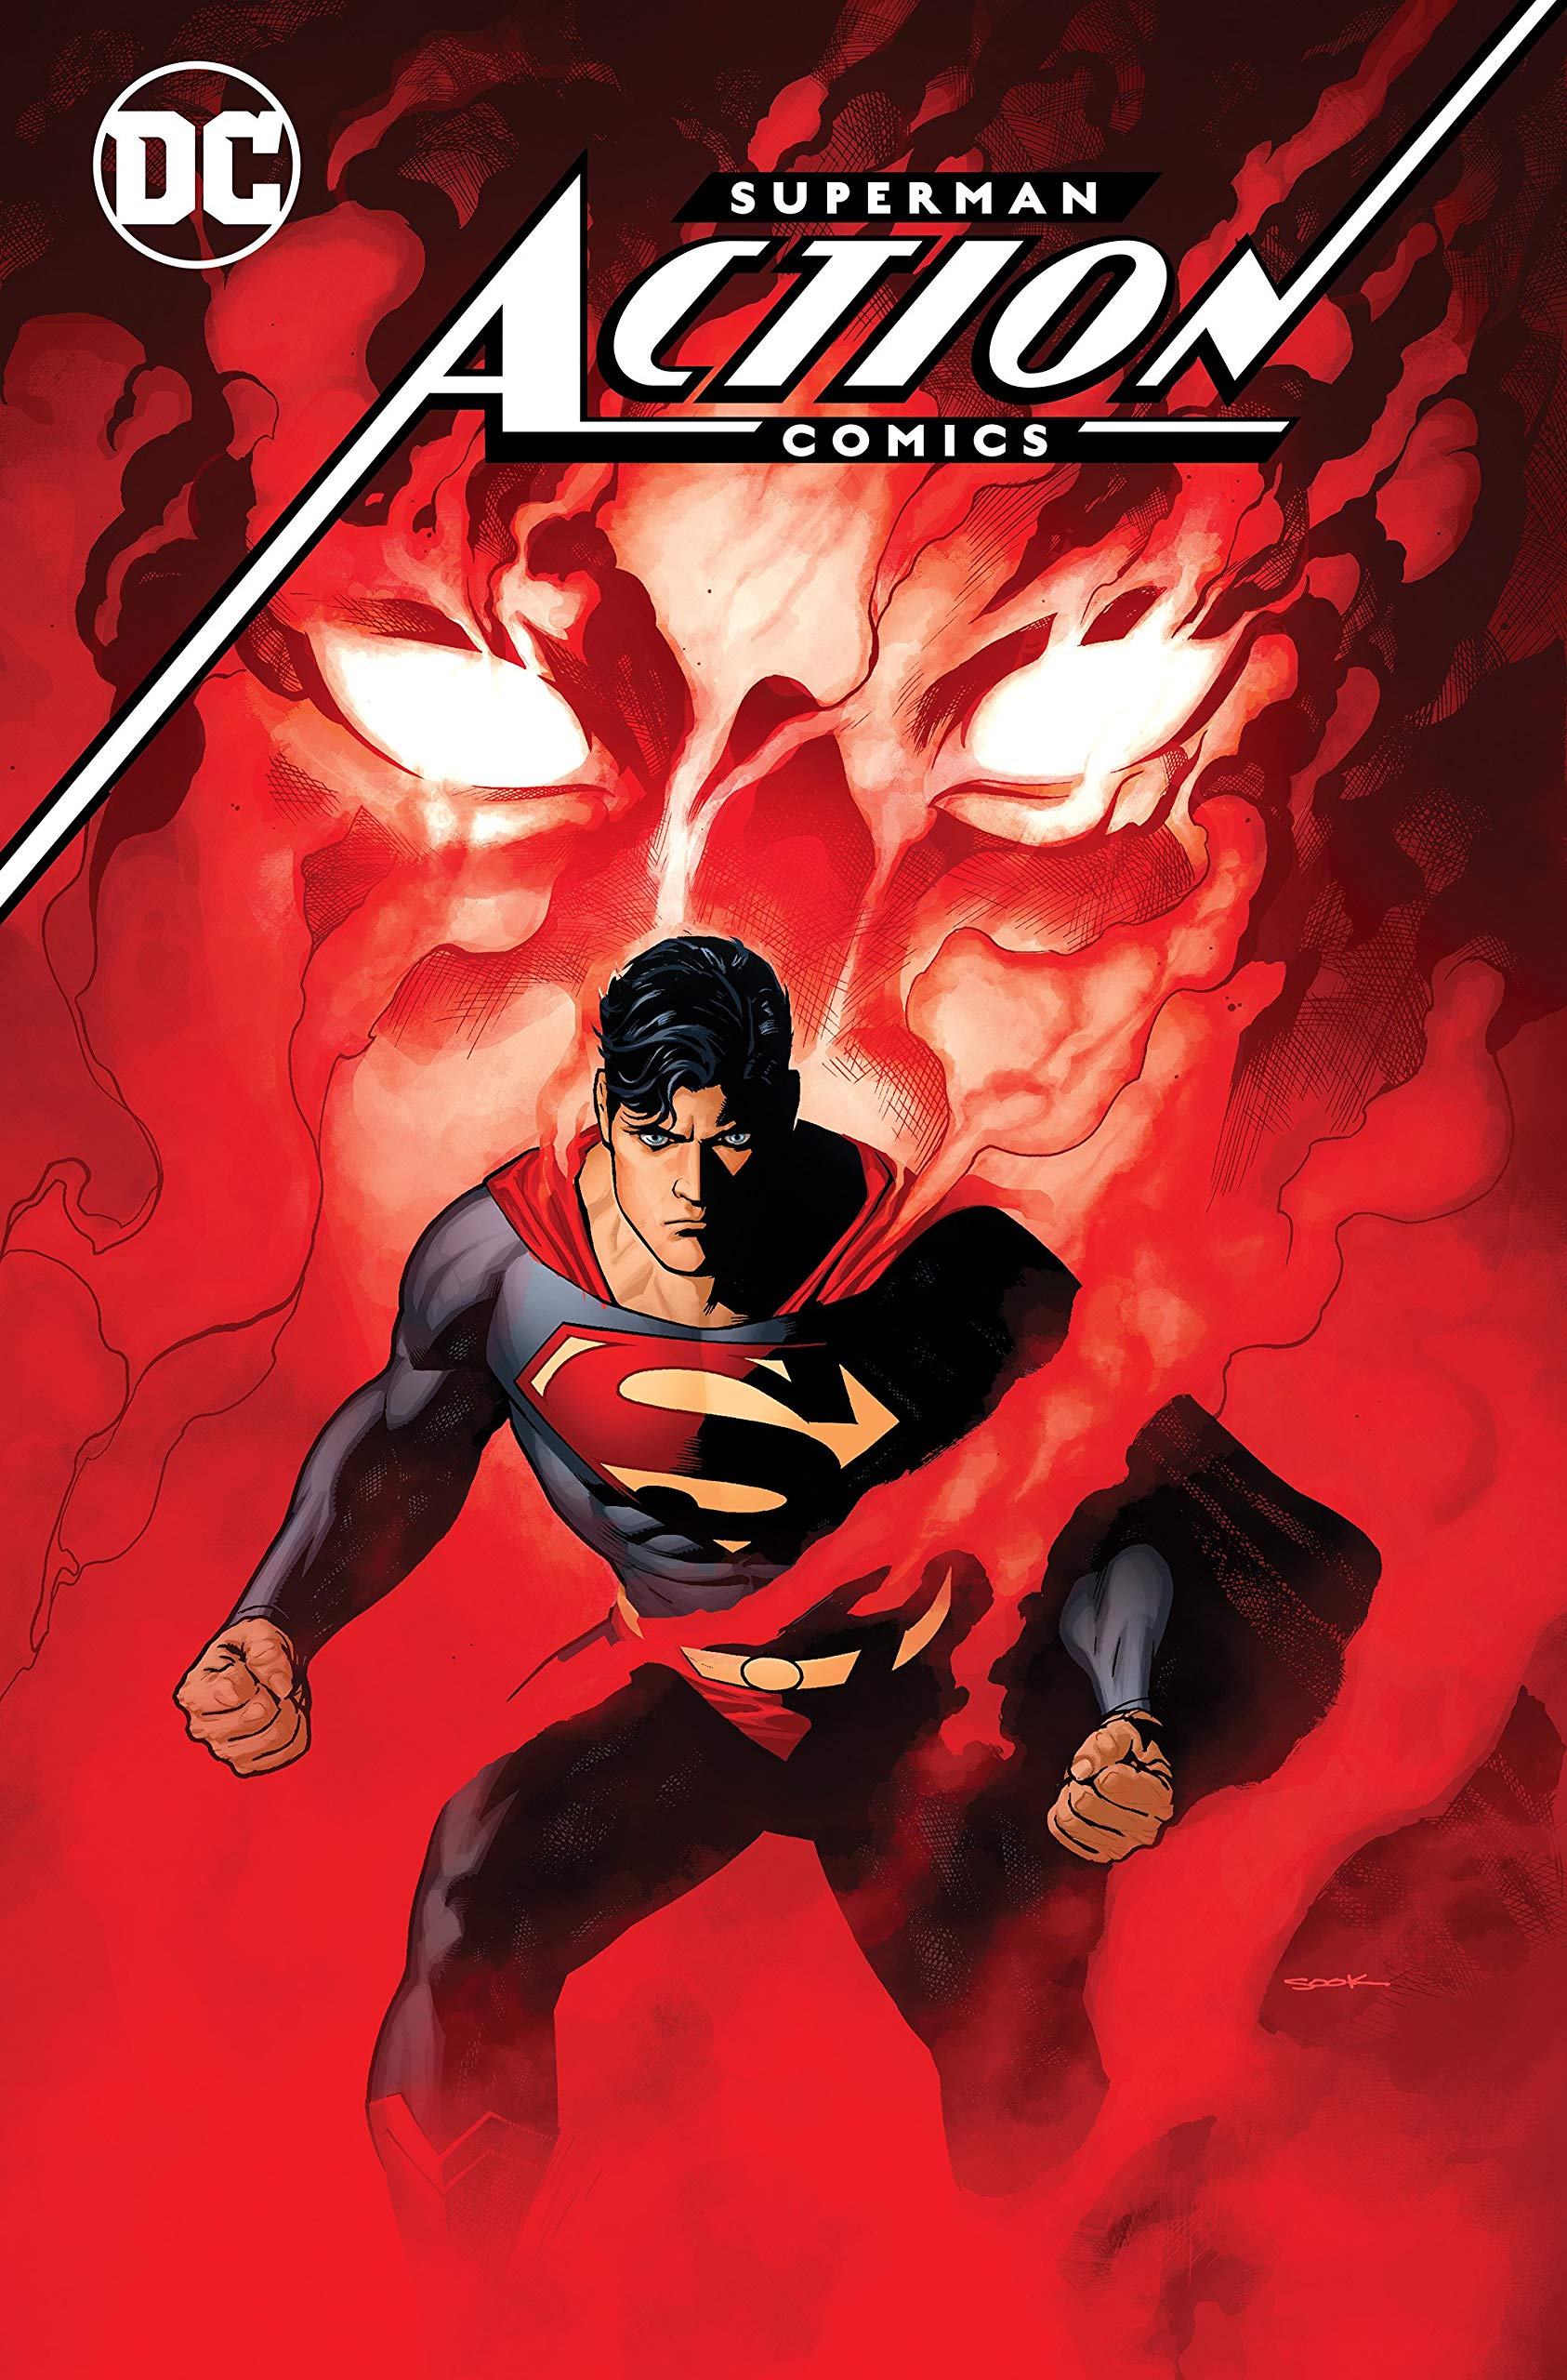 Superman: Action Comics vol 1: Invisible Mafia h/c